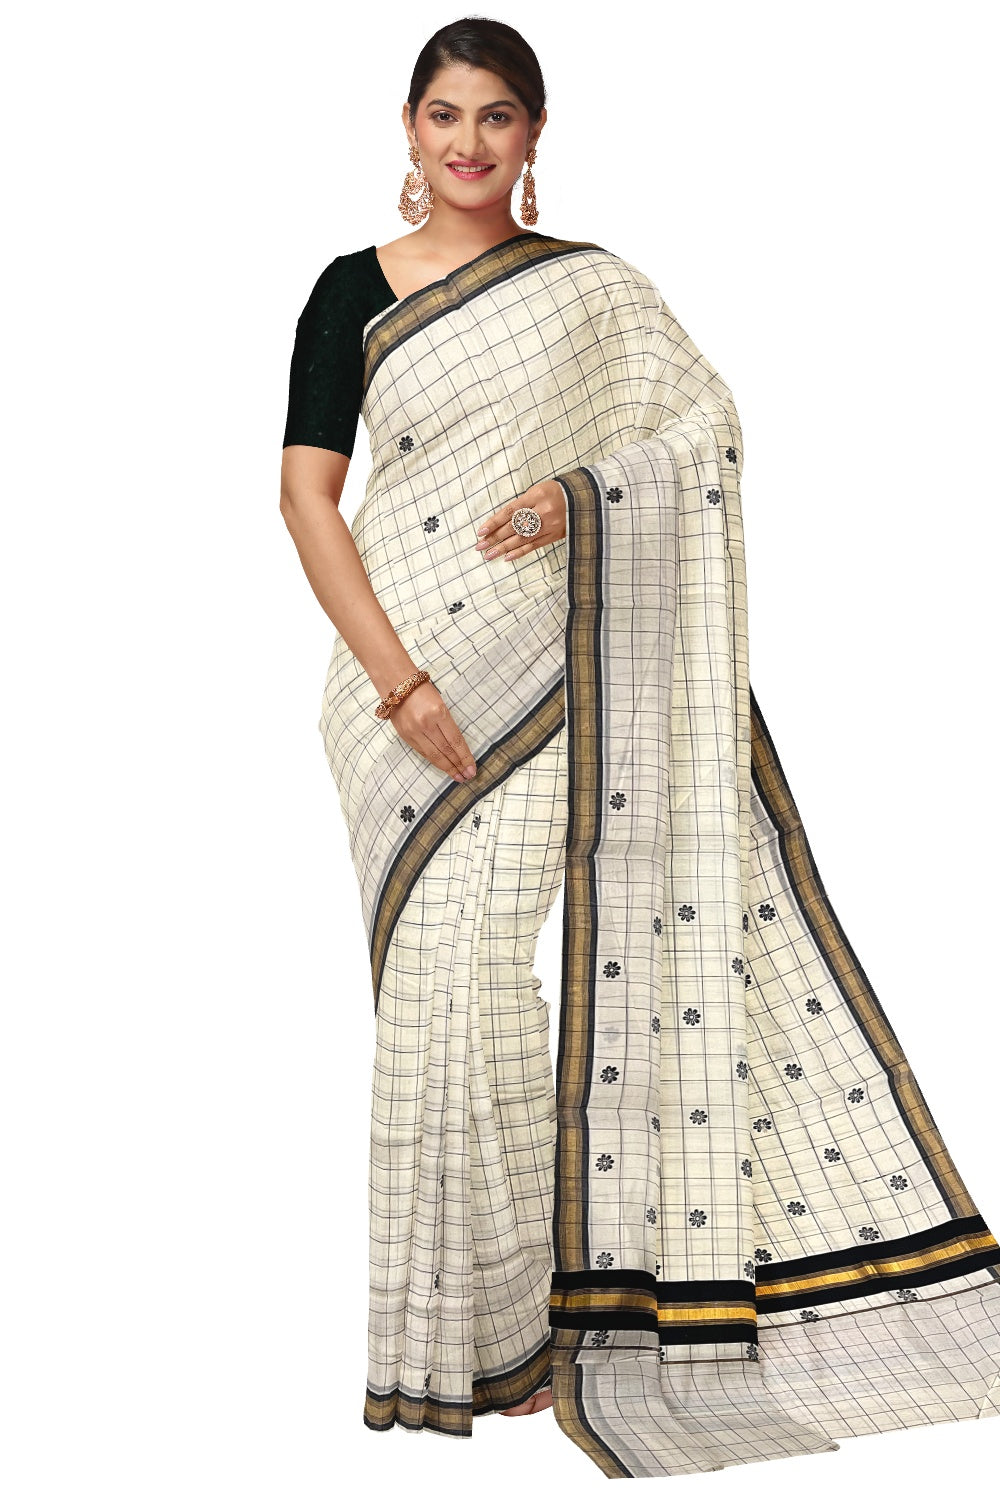 Pure Cotton Kerala Checkered Saree with Black Block Prints and Kasavu Border